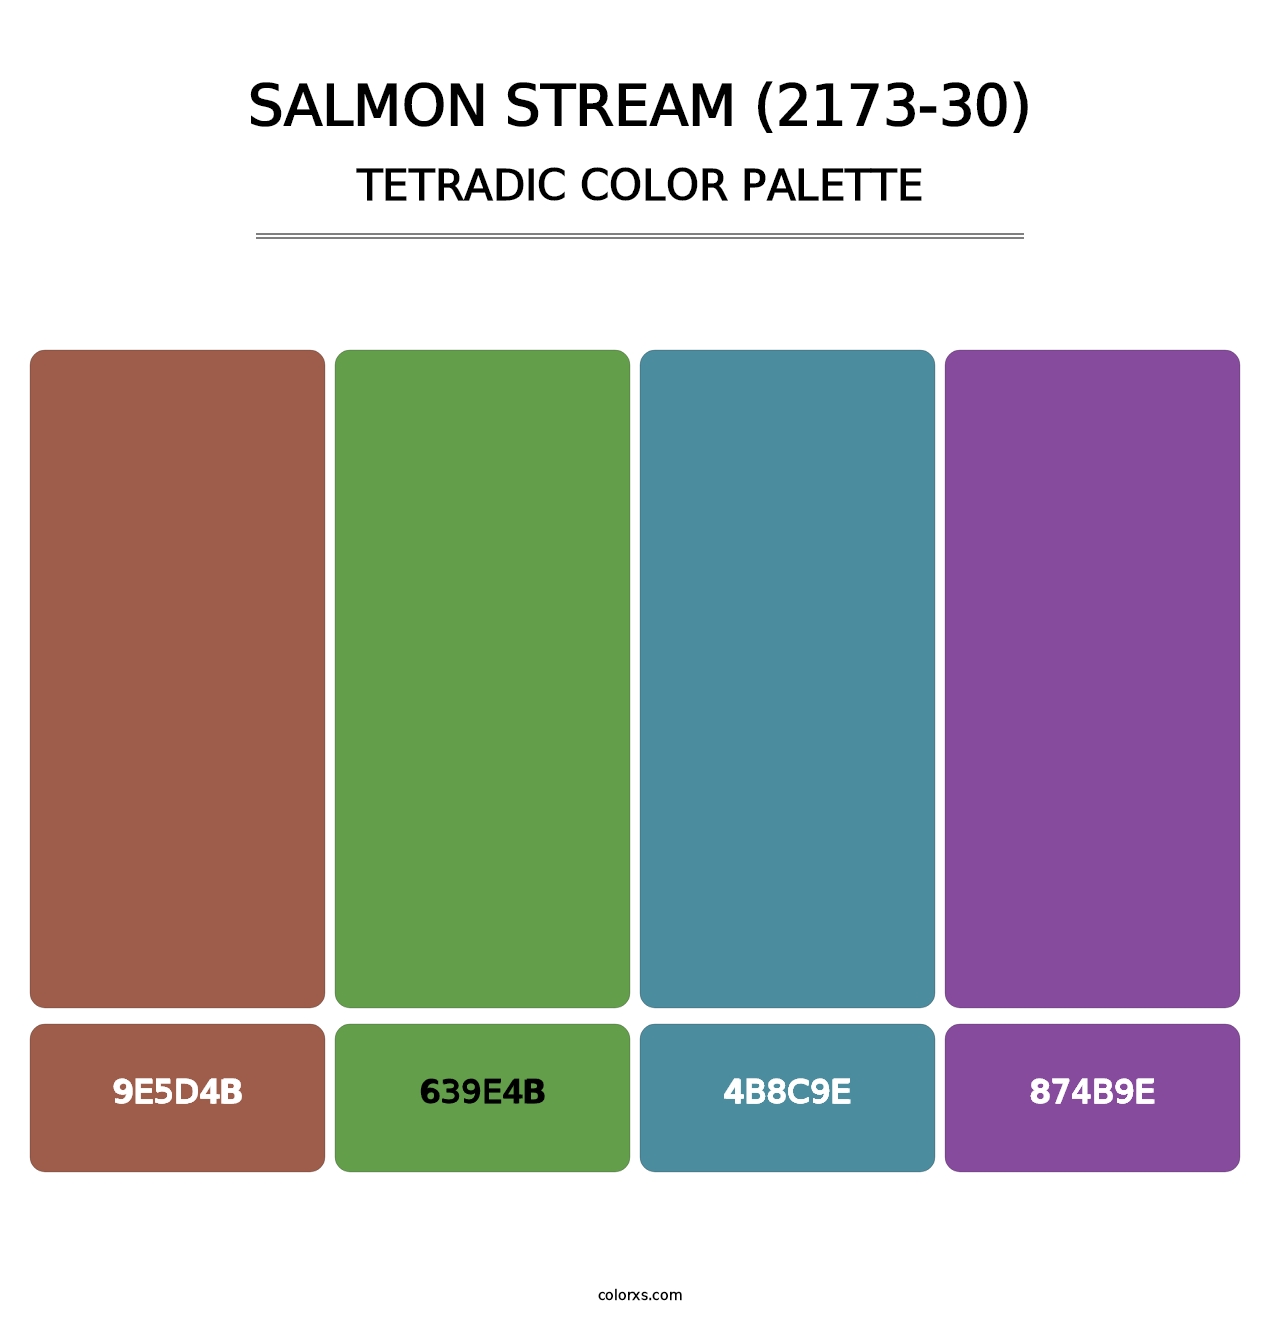 Salmon Stream (2173-30) - Tetradic Color Palette